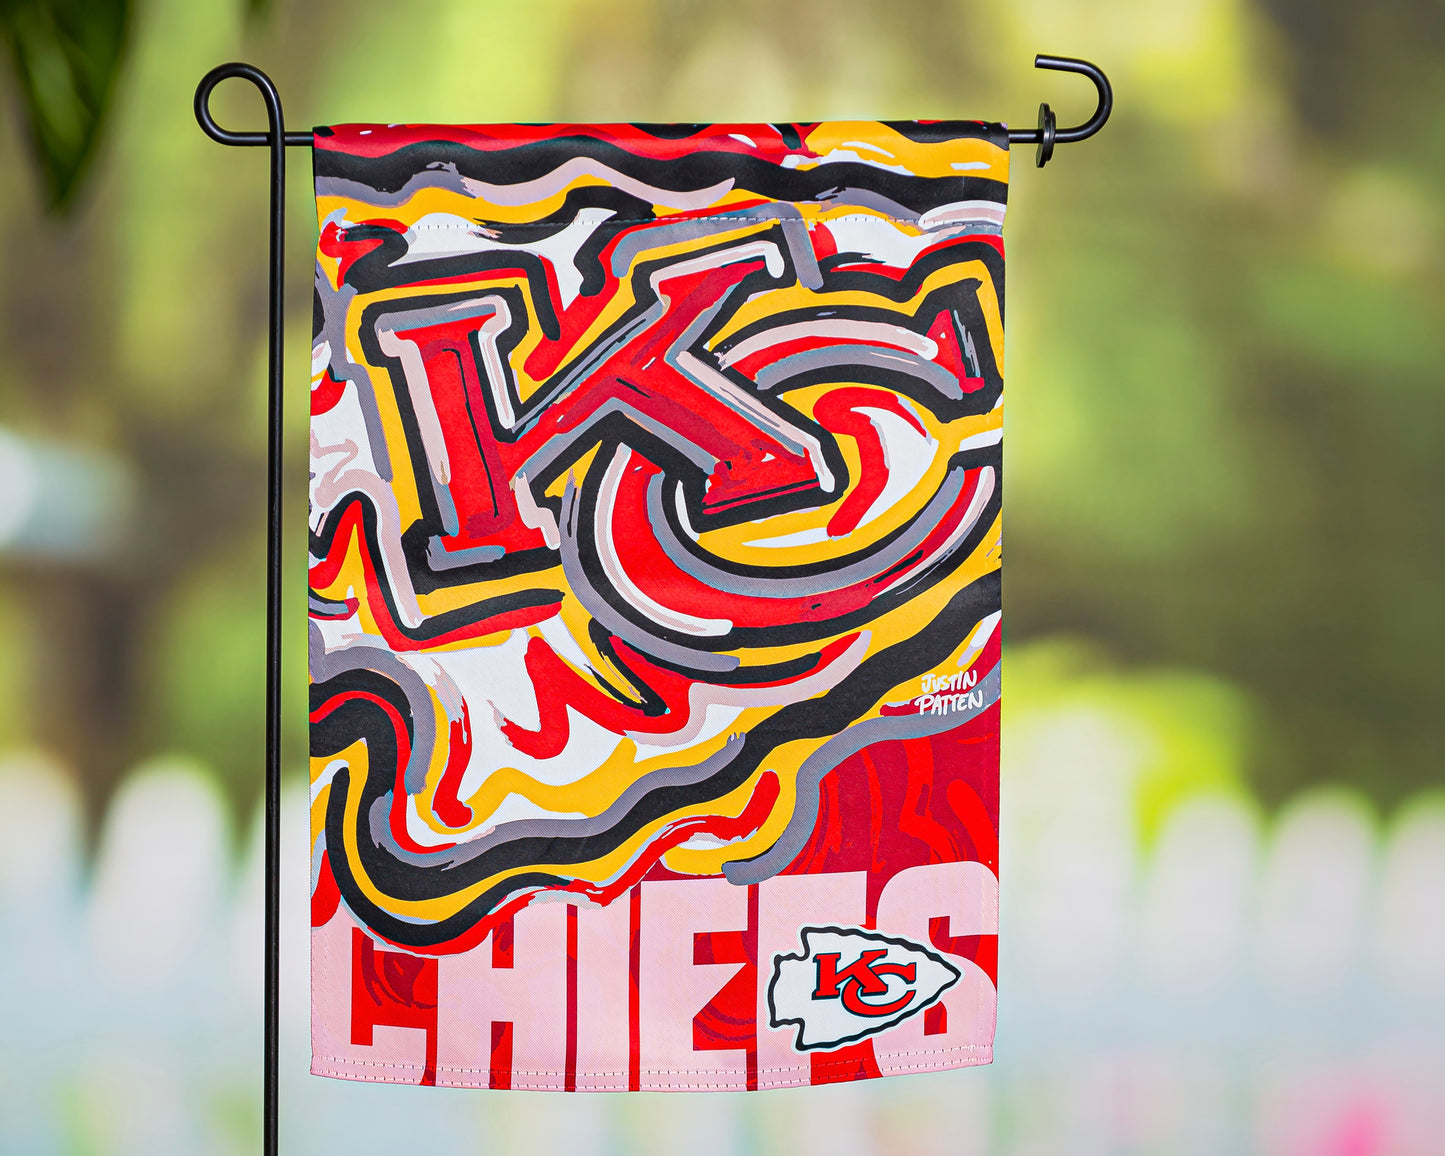 Kansas City Chiefs Garden Flag 12" x 18" by Justin Patten